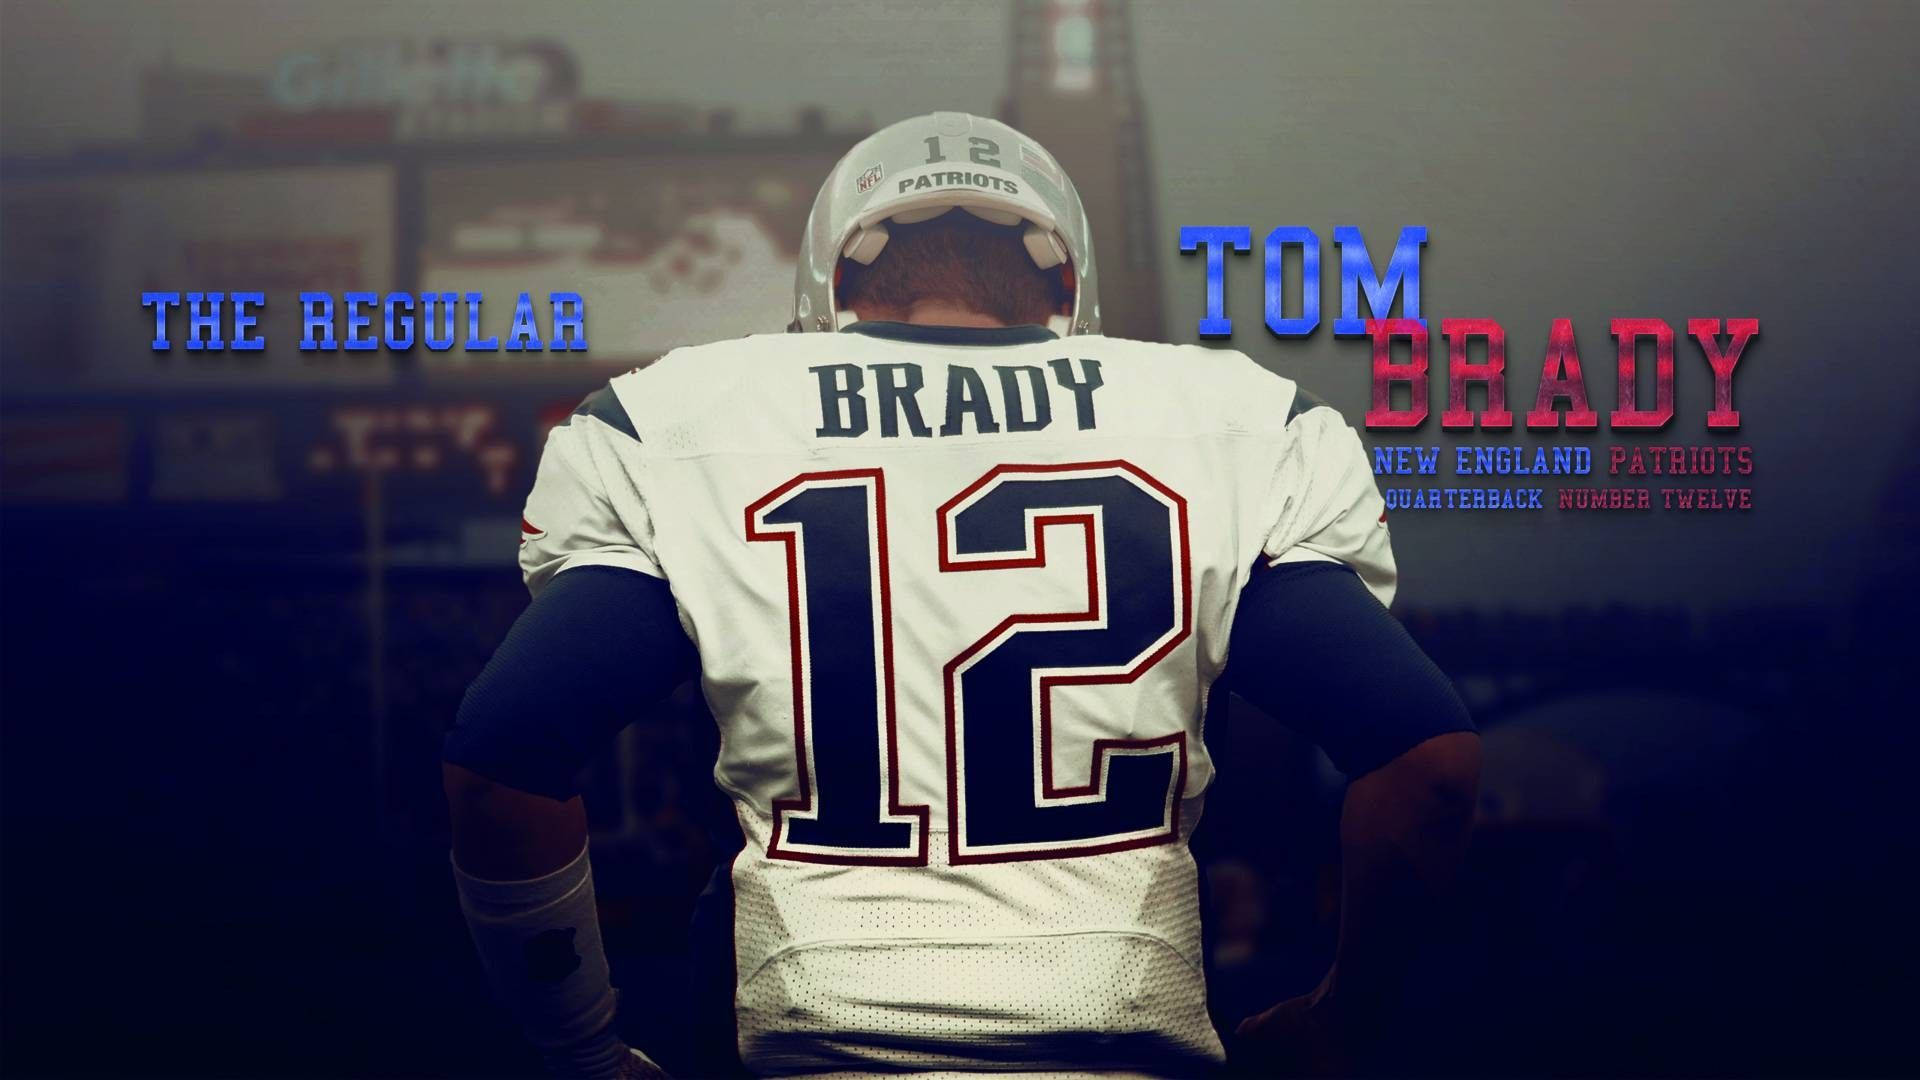 Tom Brady The Regular Wallpaper